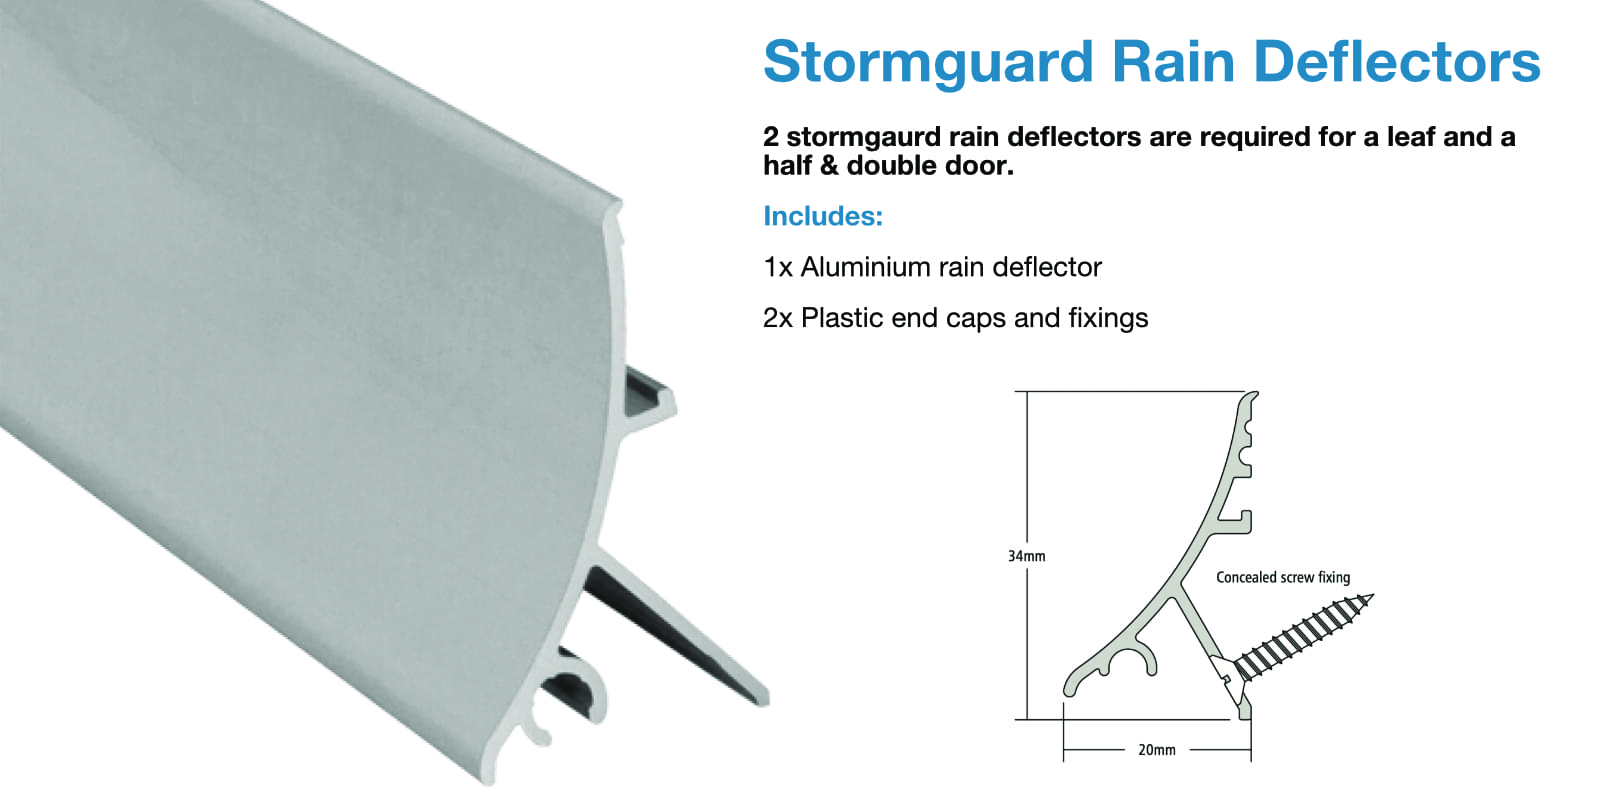 Stormguard rain deflector kit contents